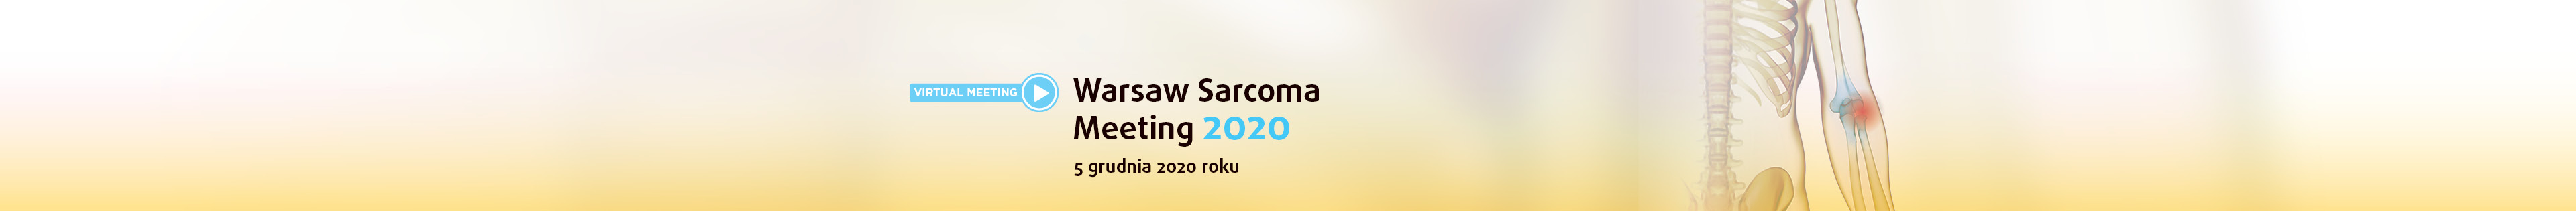 Warsaw Sarcoma Meeting 2020